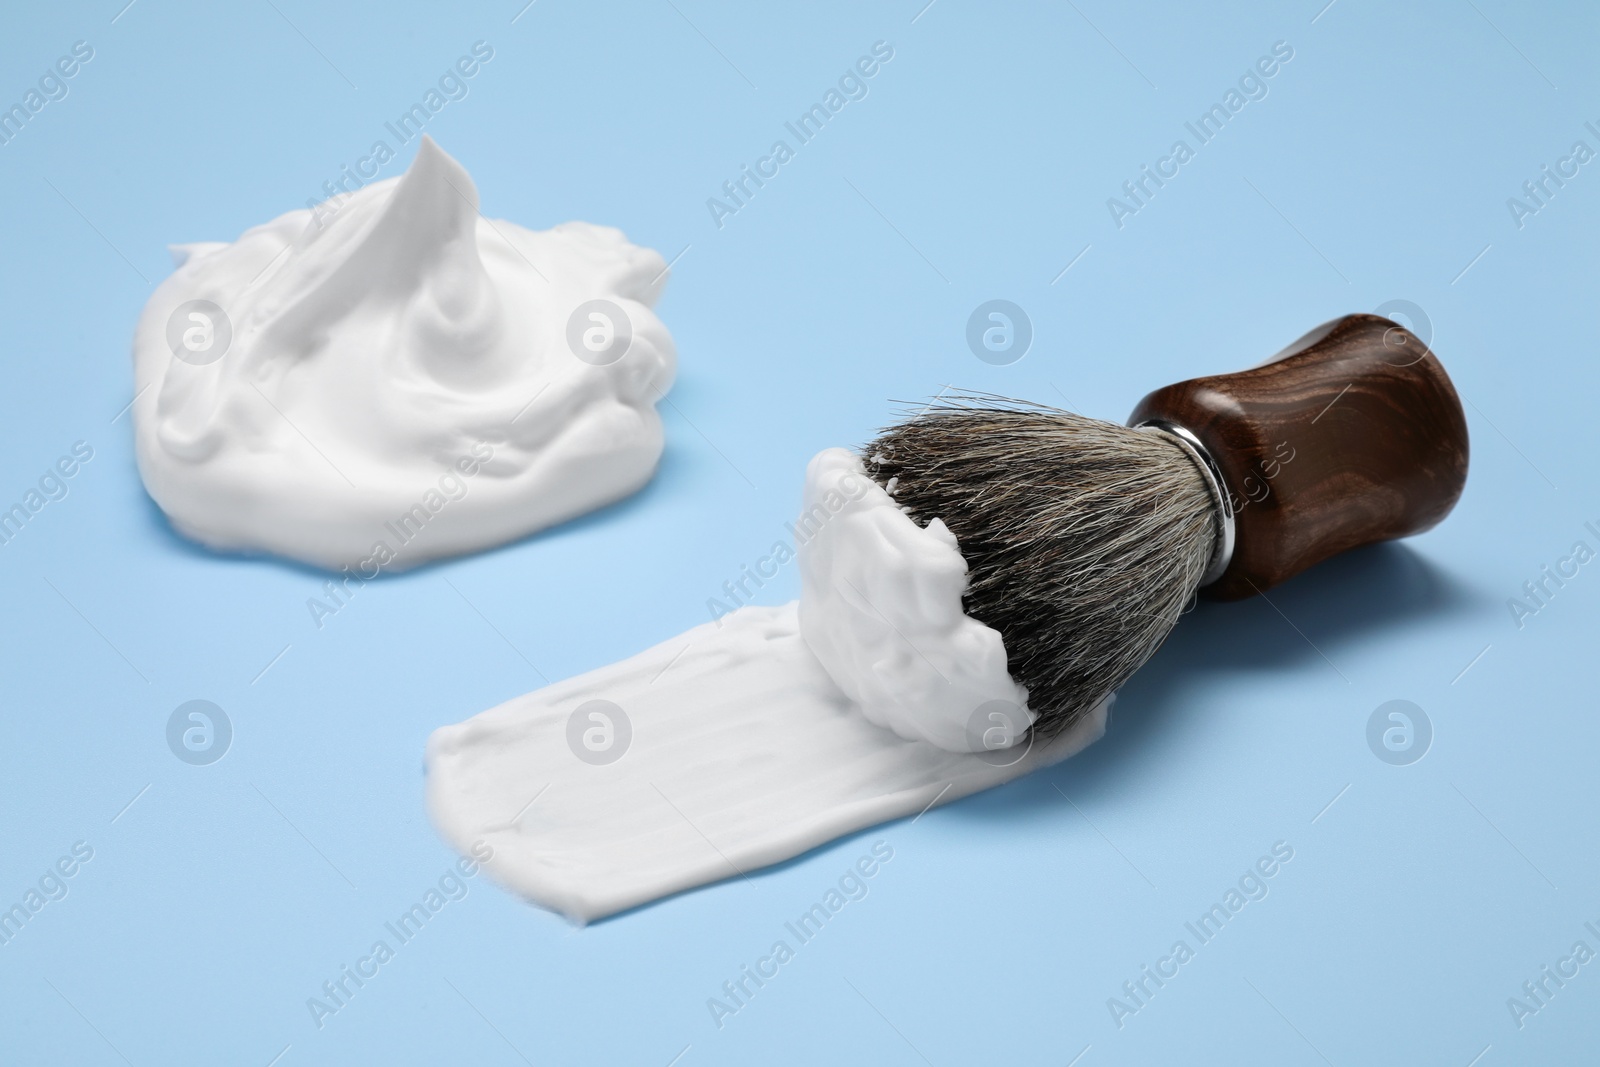 Photo of Brush with shaving foam on light blue background